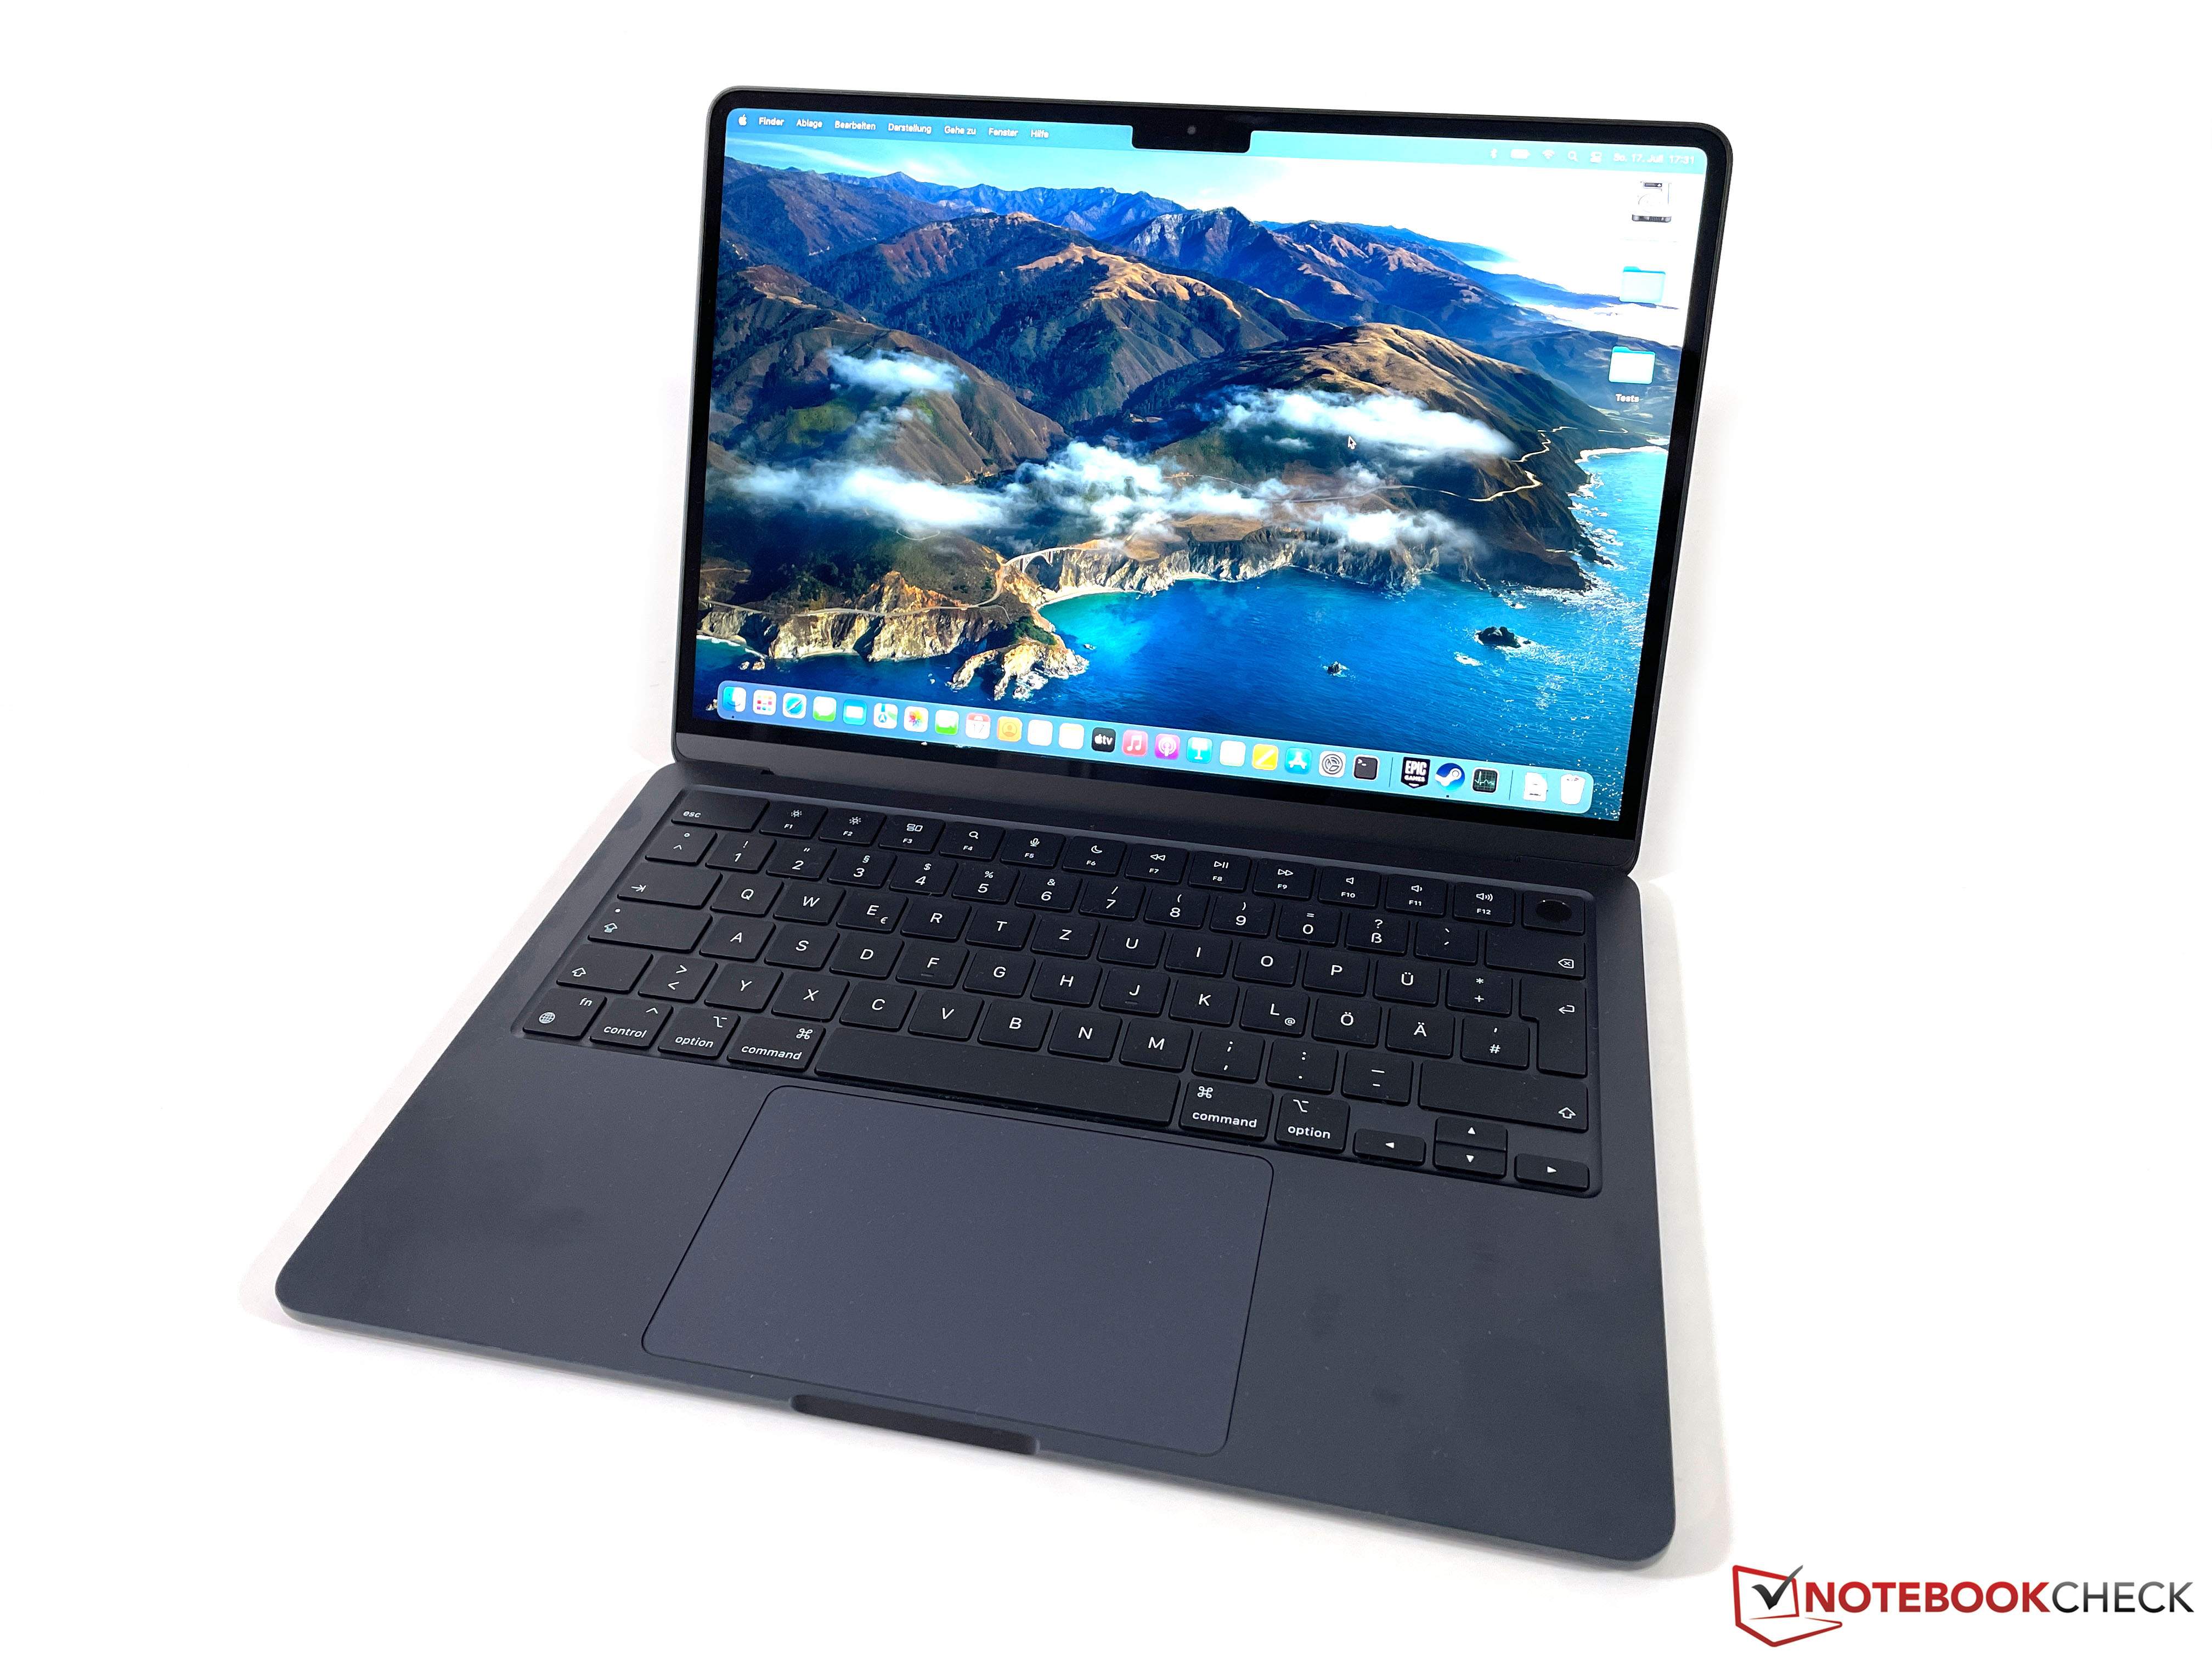 Air Das gute, MacBook Entry Apple M2 Tests Test Alltags- sehr Notebookcheck.com - MacBook aber teure - zu